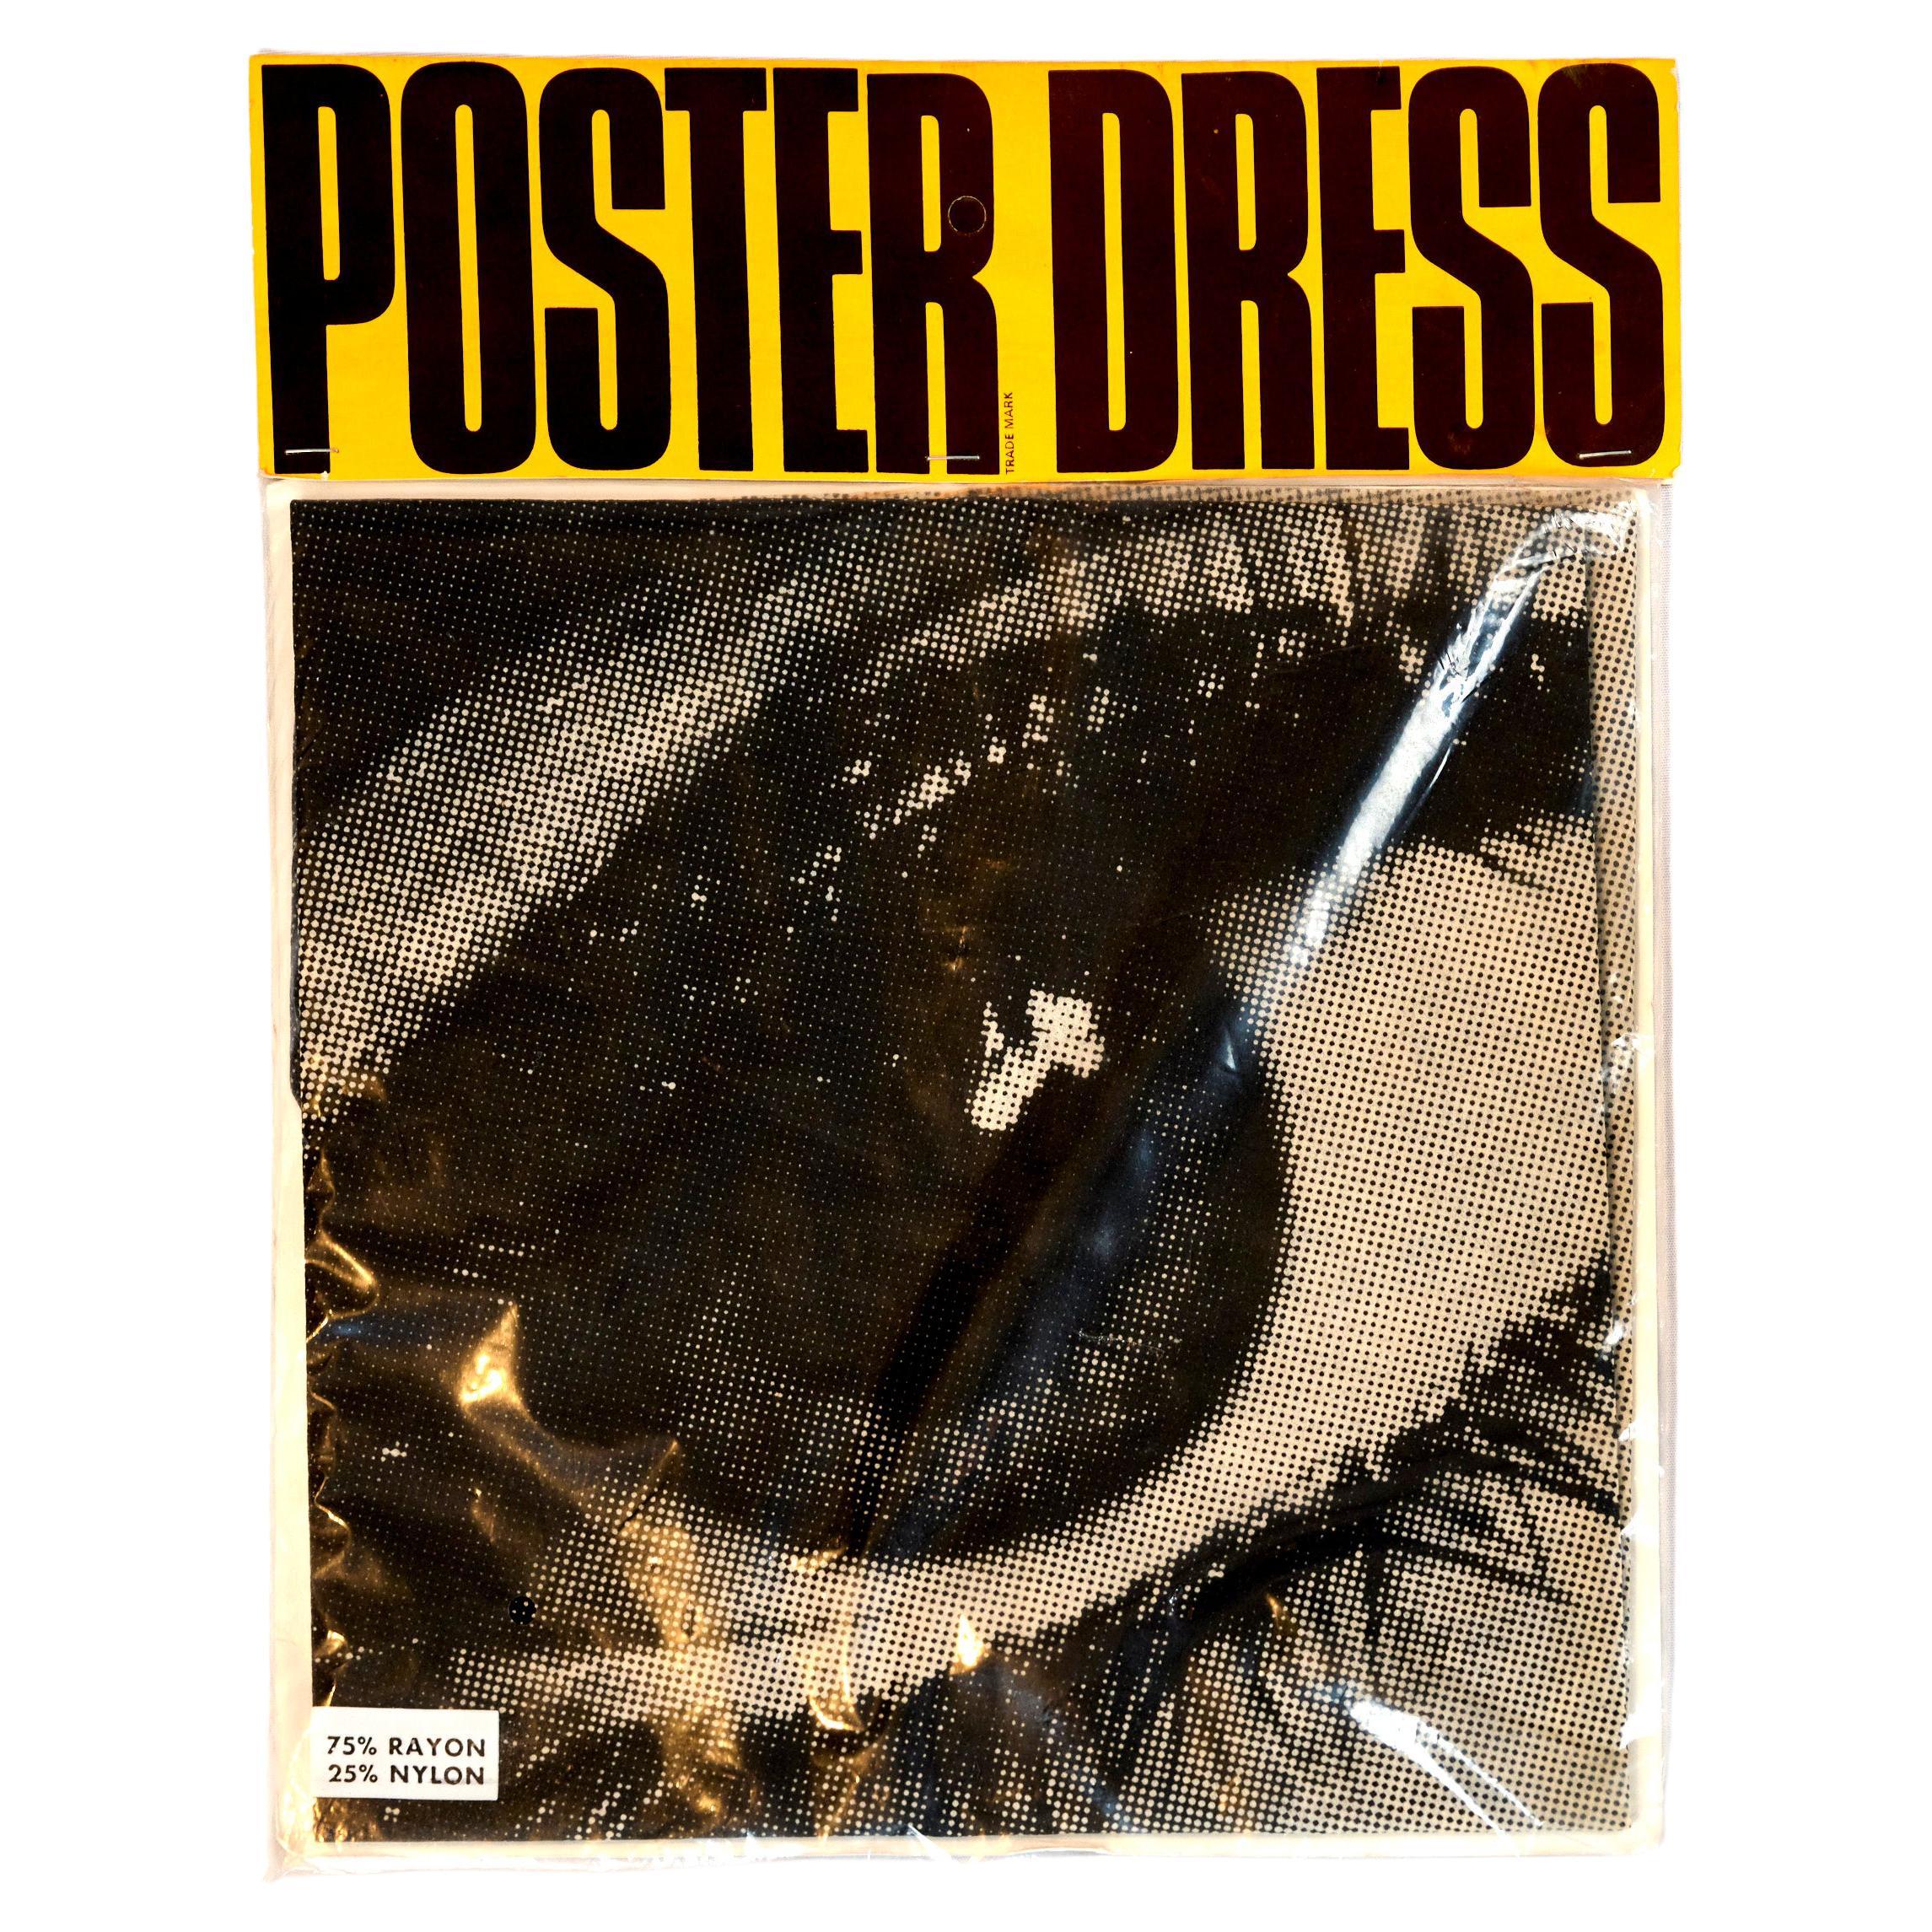 'Eye' Poster Dress by Harry Gordon, Poster Dresses Ltd. London, England